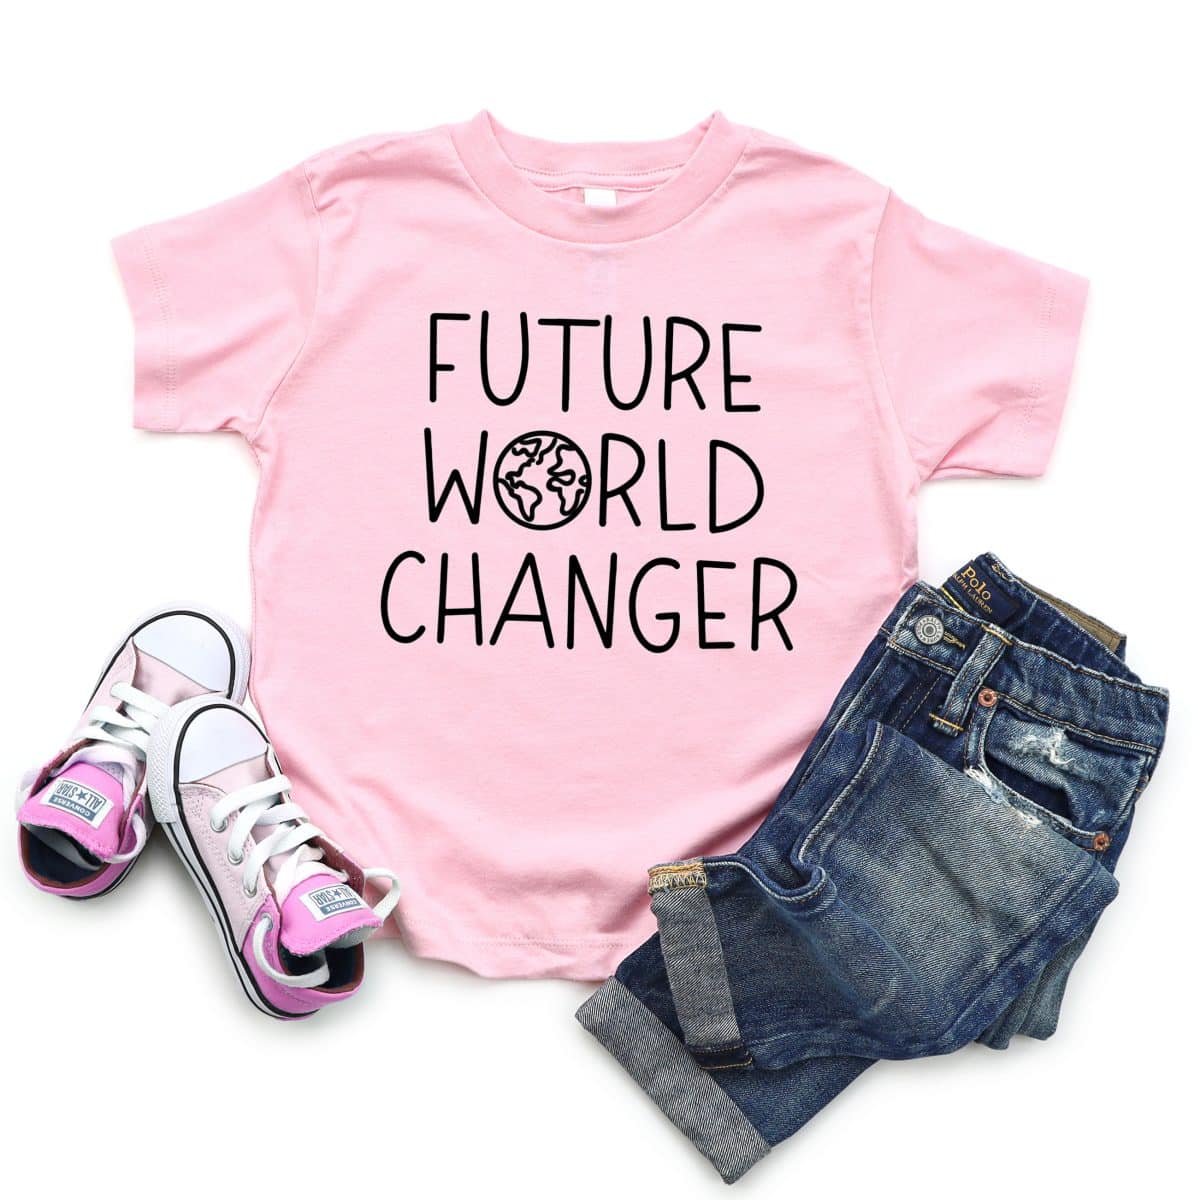 Future World Changer Shirt by Kara Creates